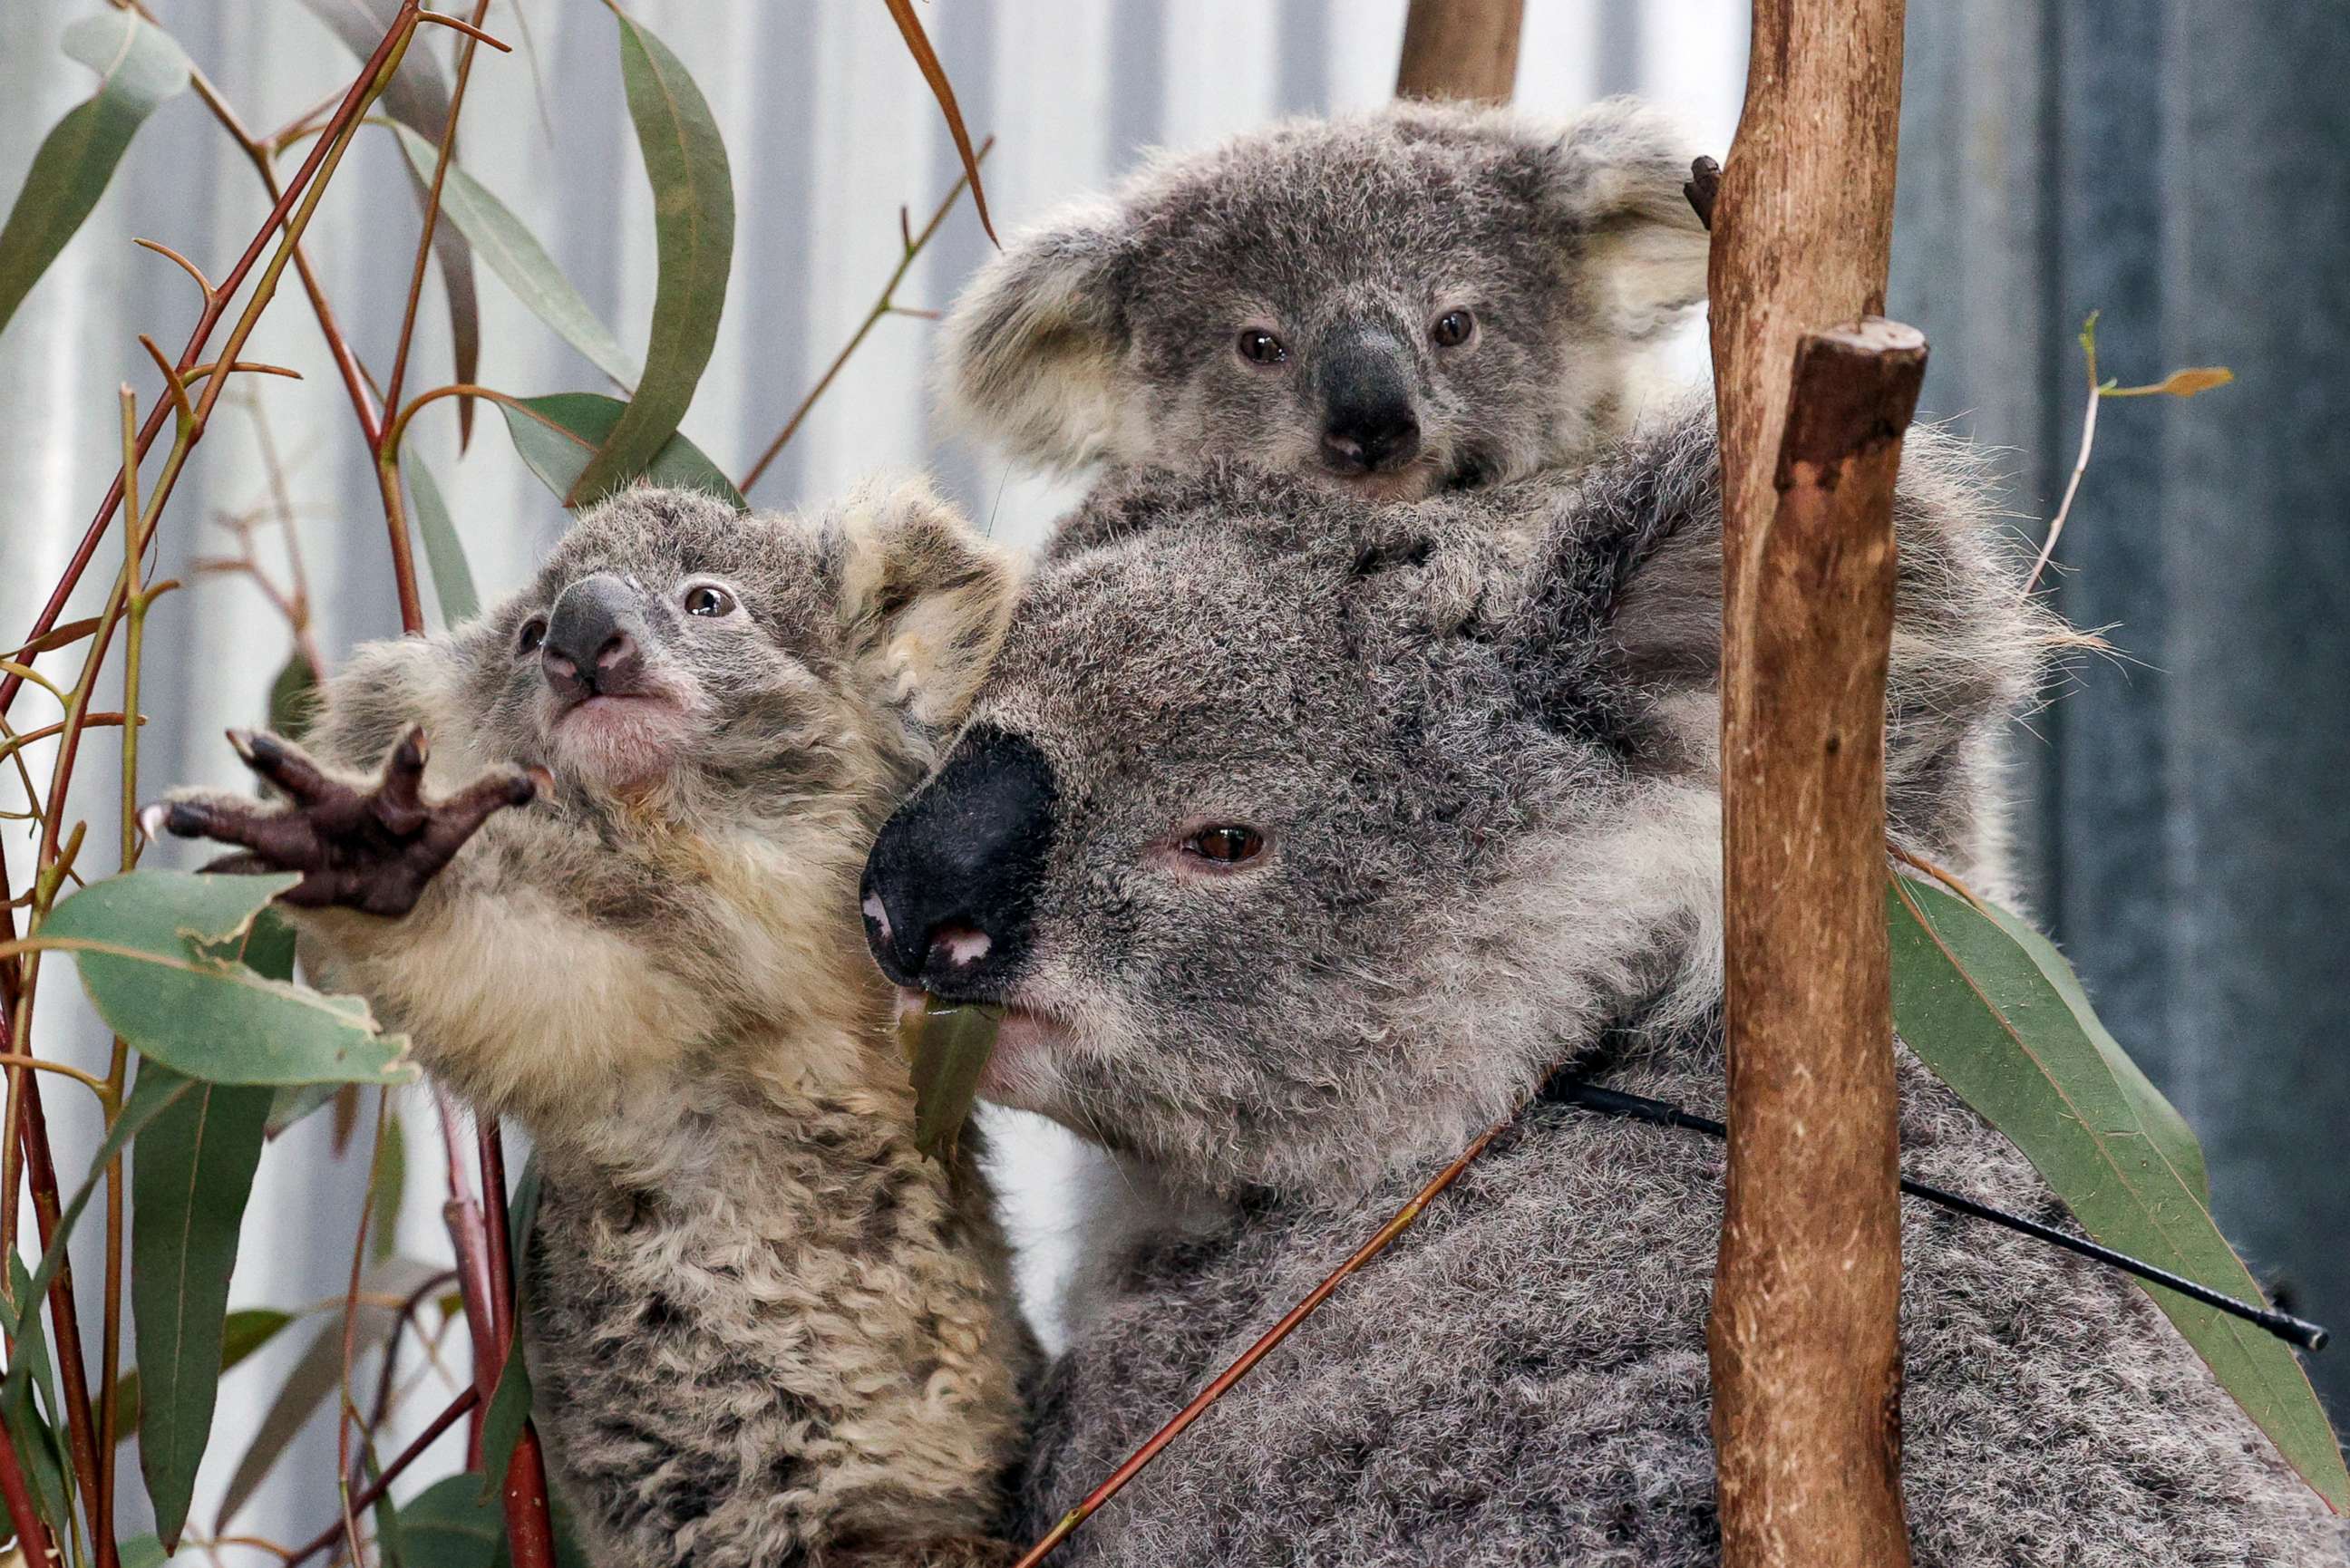 Koalas face a bleak future amid fires, infection, logging - ABC News